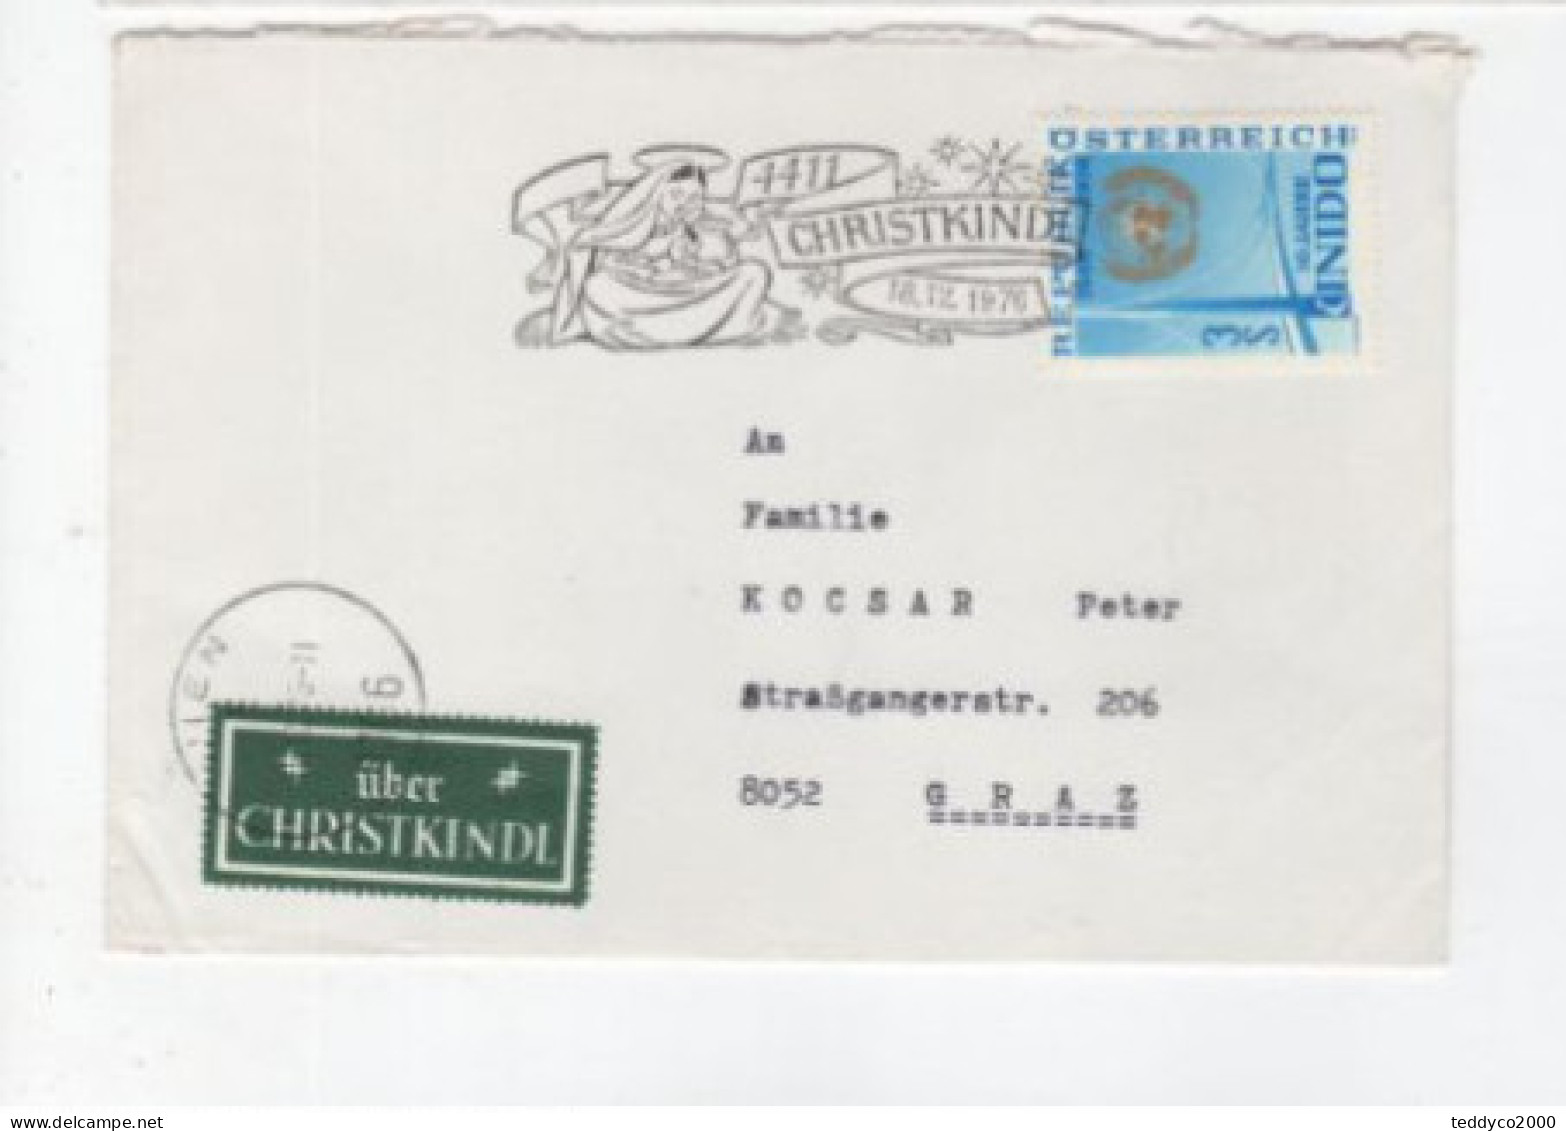 OSTERREICH CHRISTKINDL 1976 UNIDO - FDC